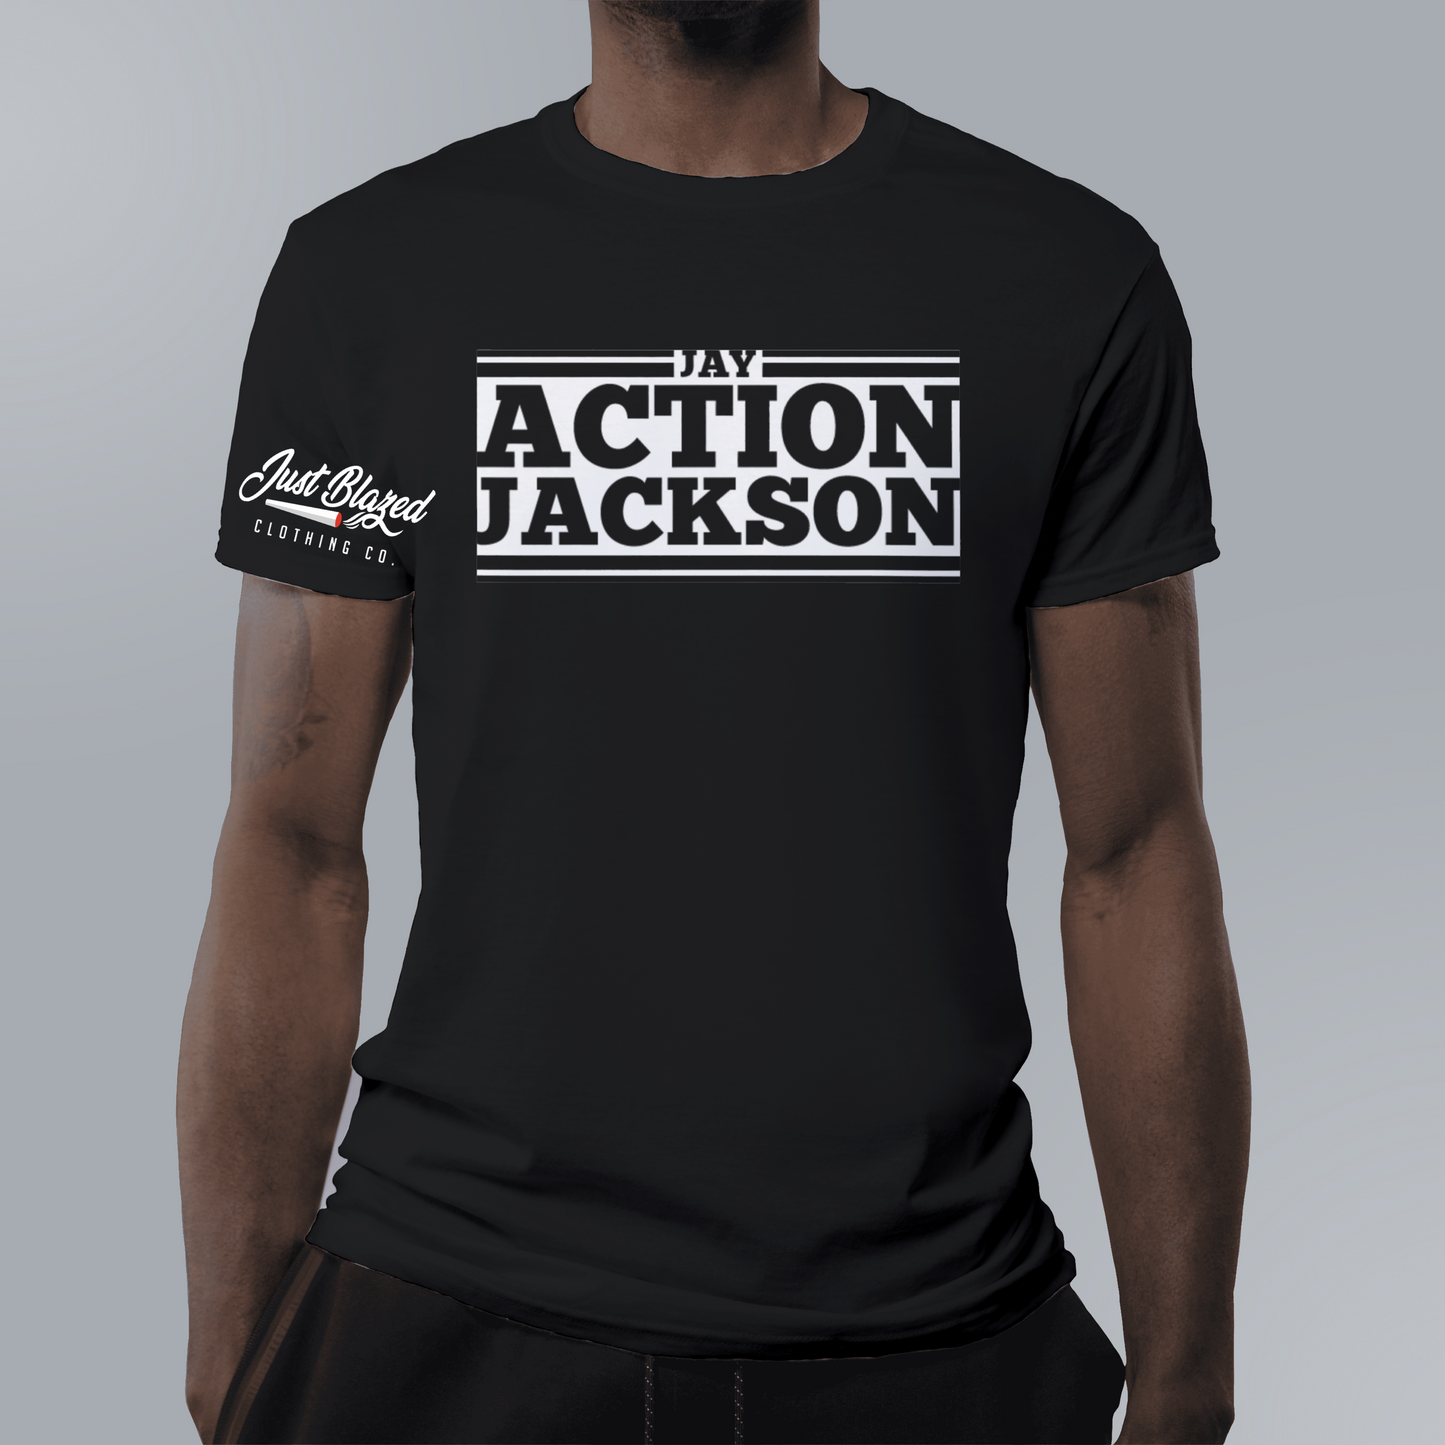 Jay “Action Jackson” Fight Shirt